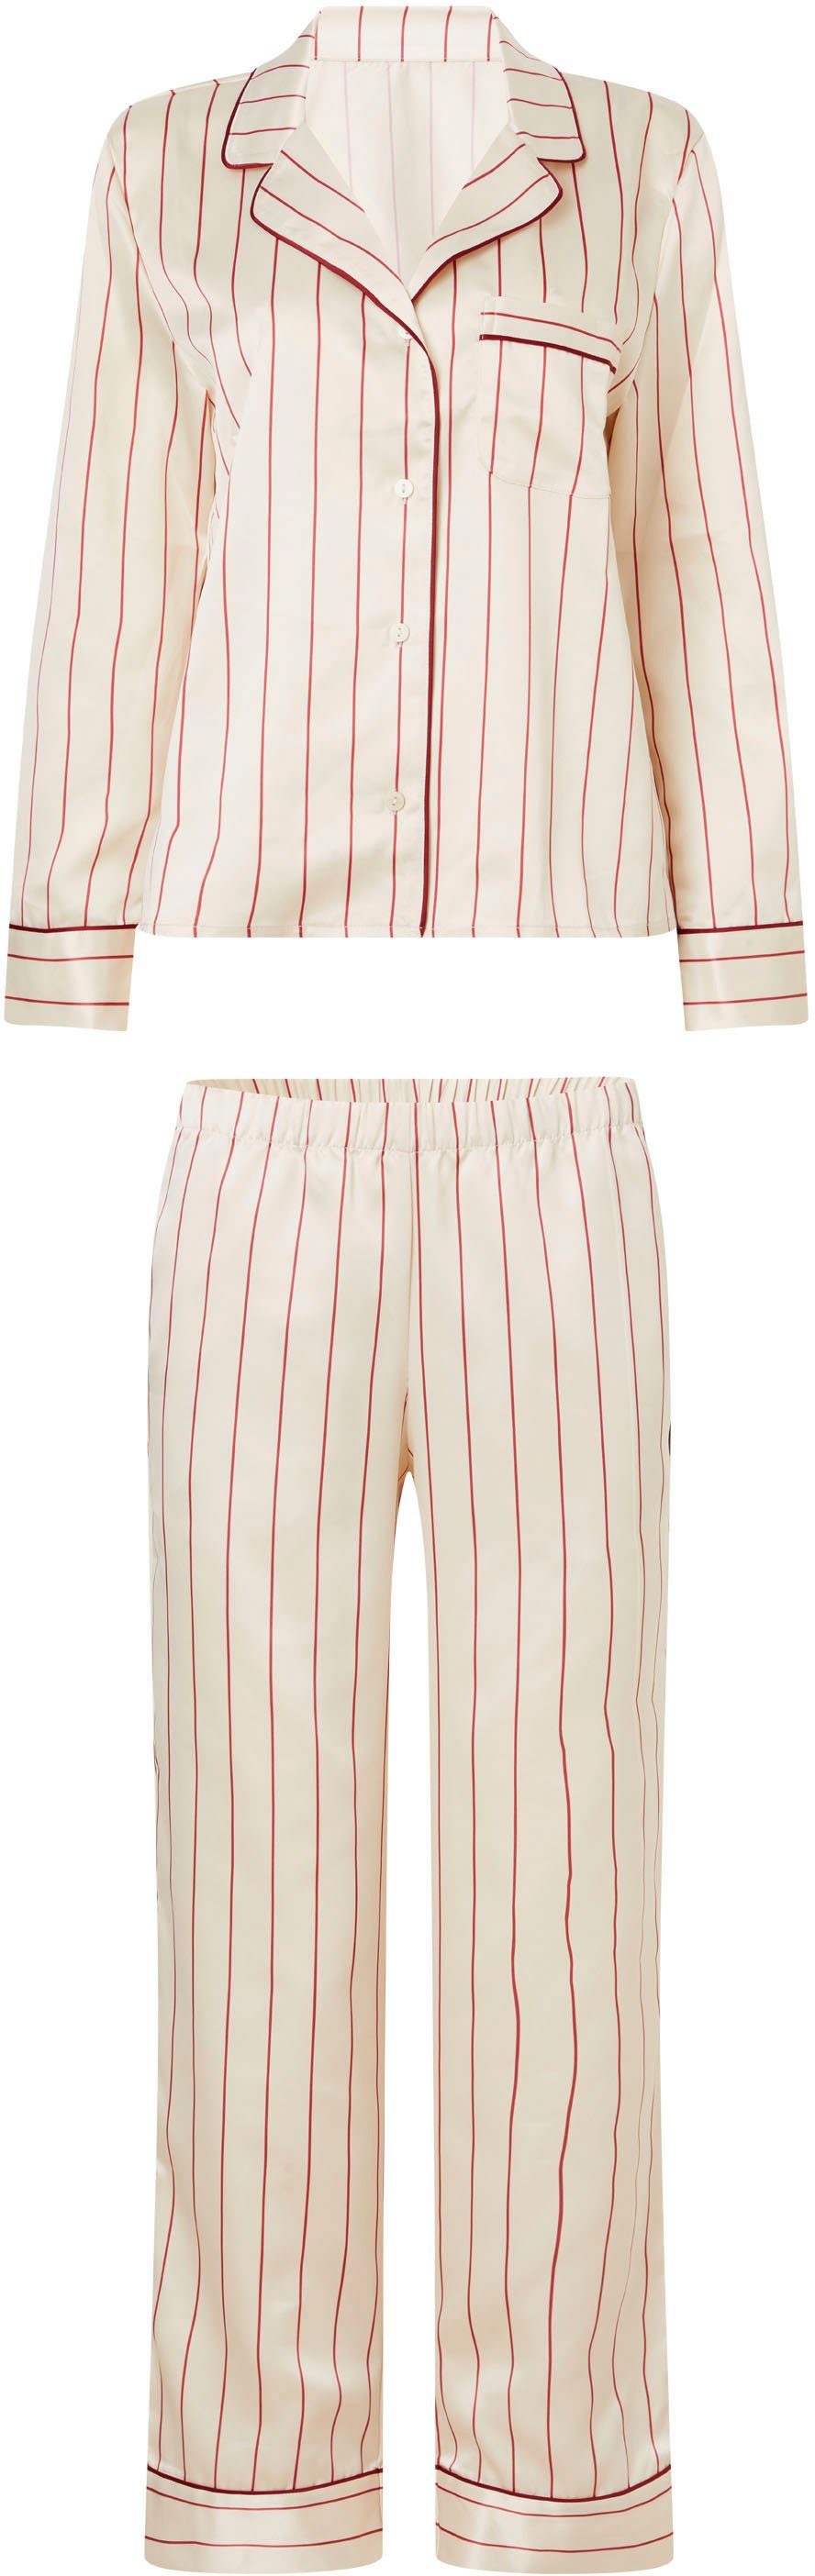 Pyjama Klein im Calvin 3 Pyjama L/S & Set Underwear Schlafmaske SET PANT (Set, Stück)